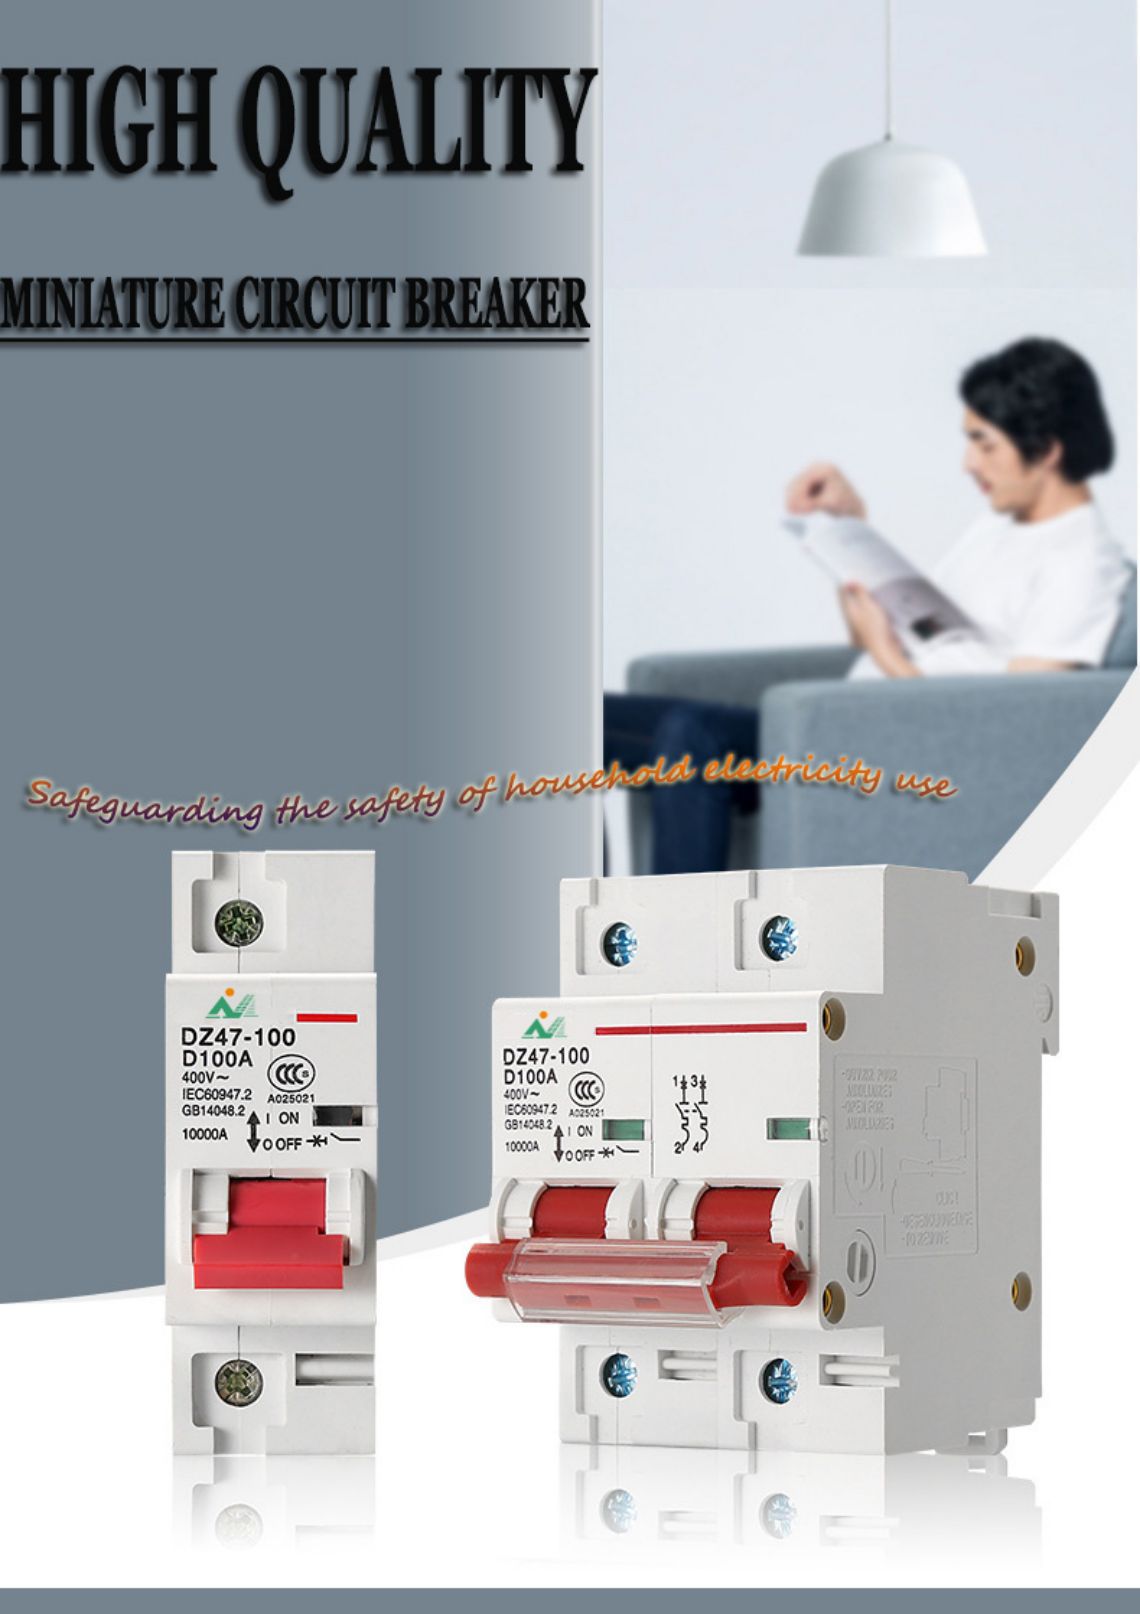 AC miniature circuit breaker